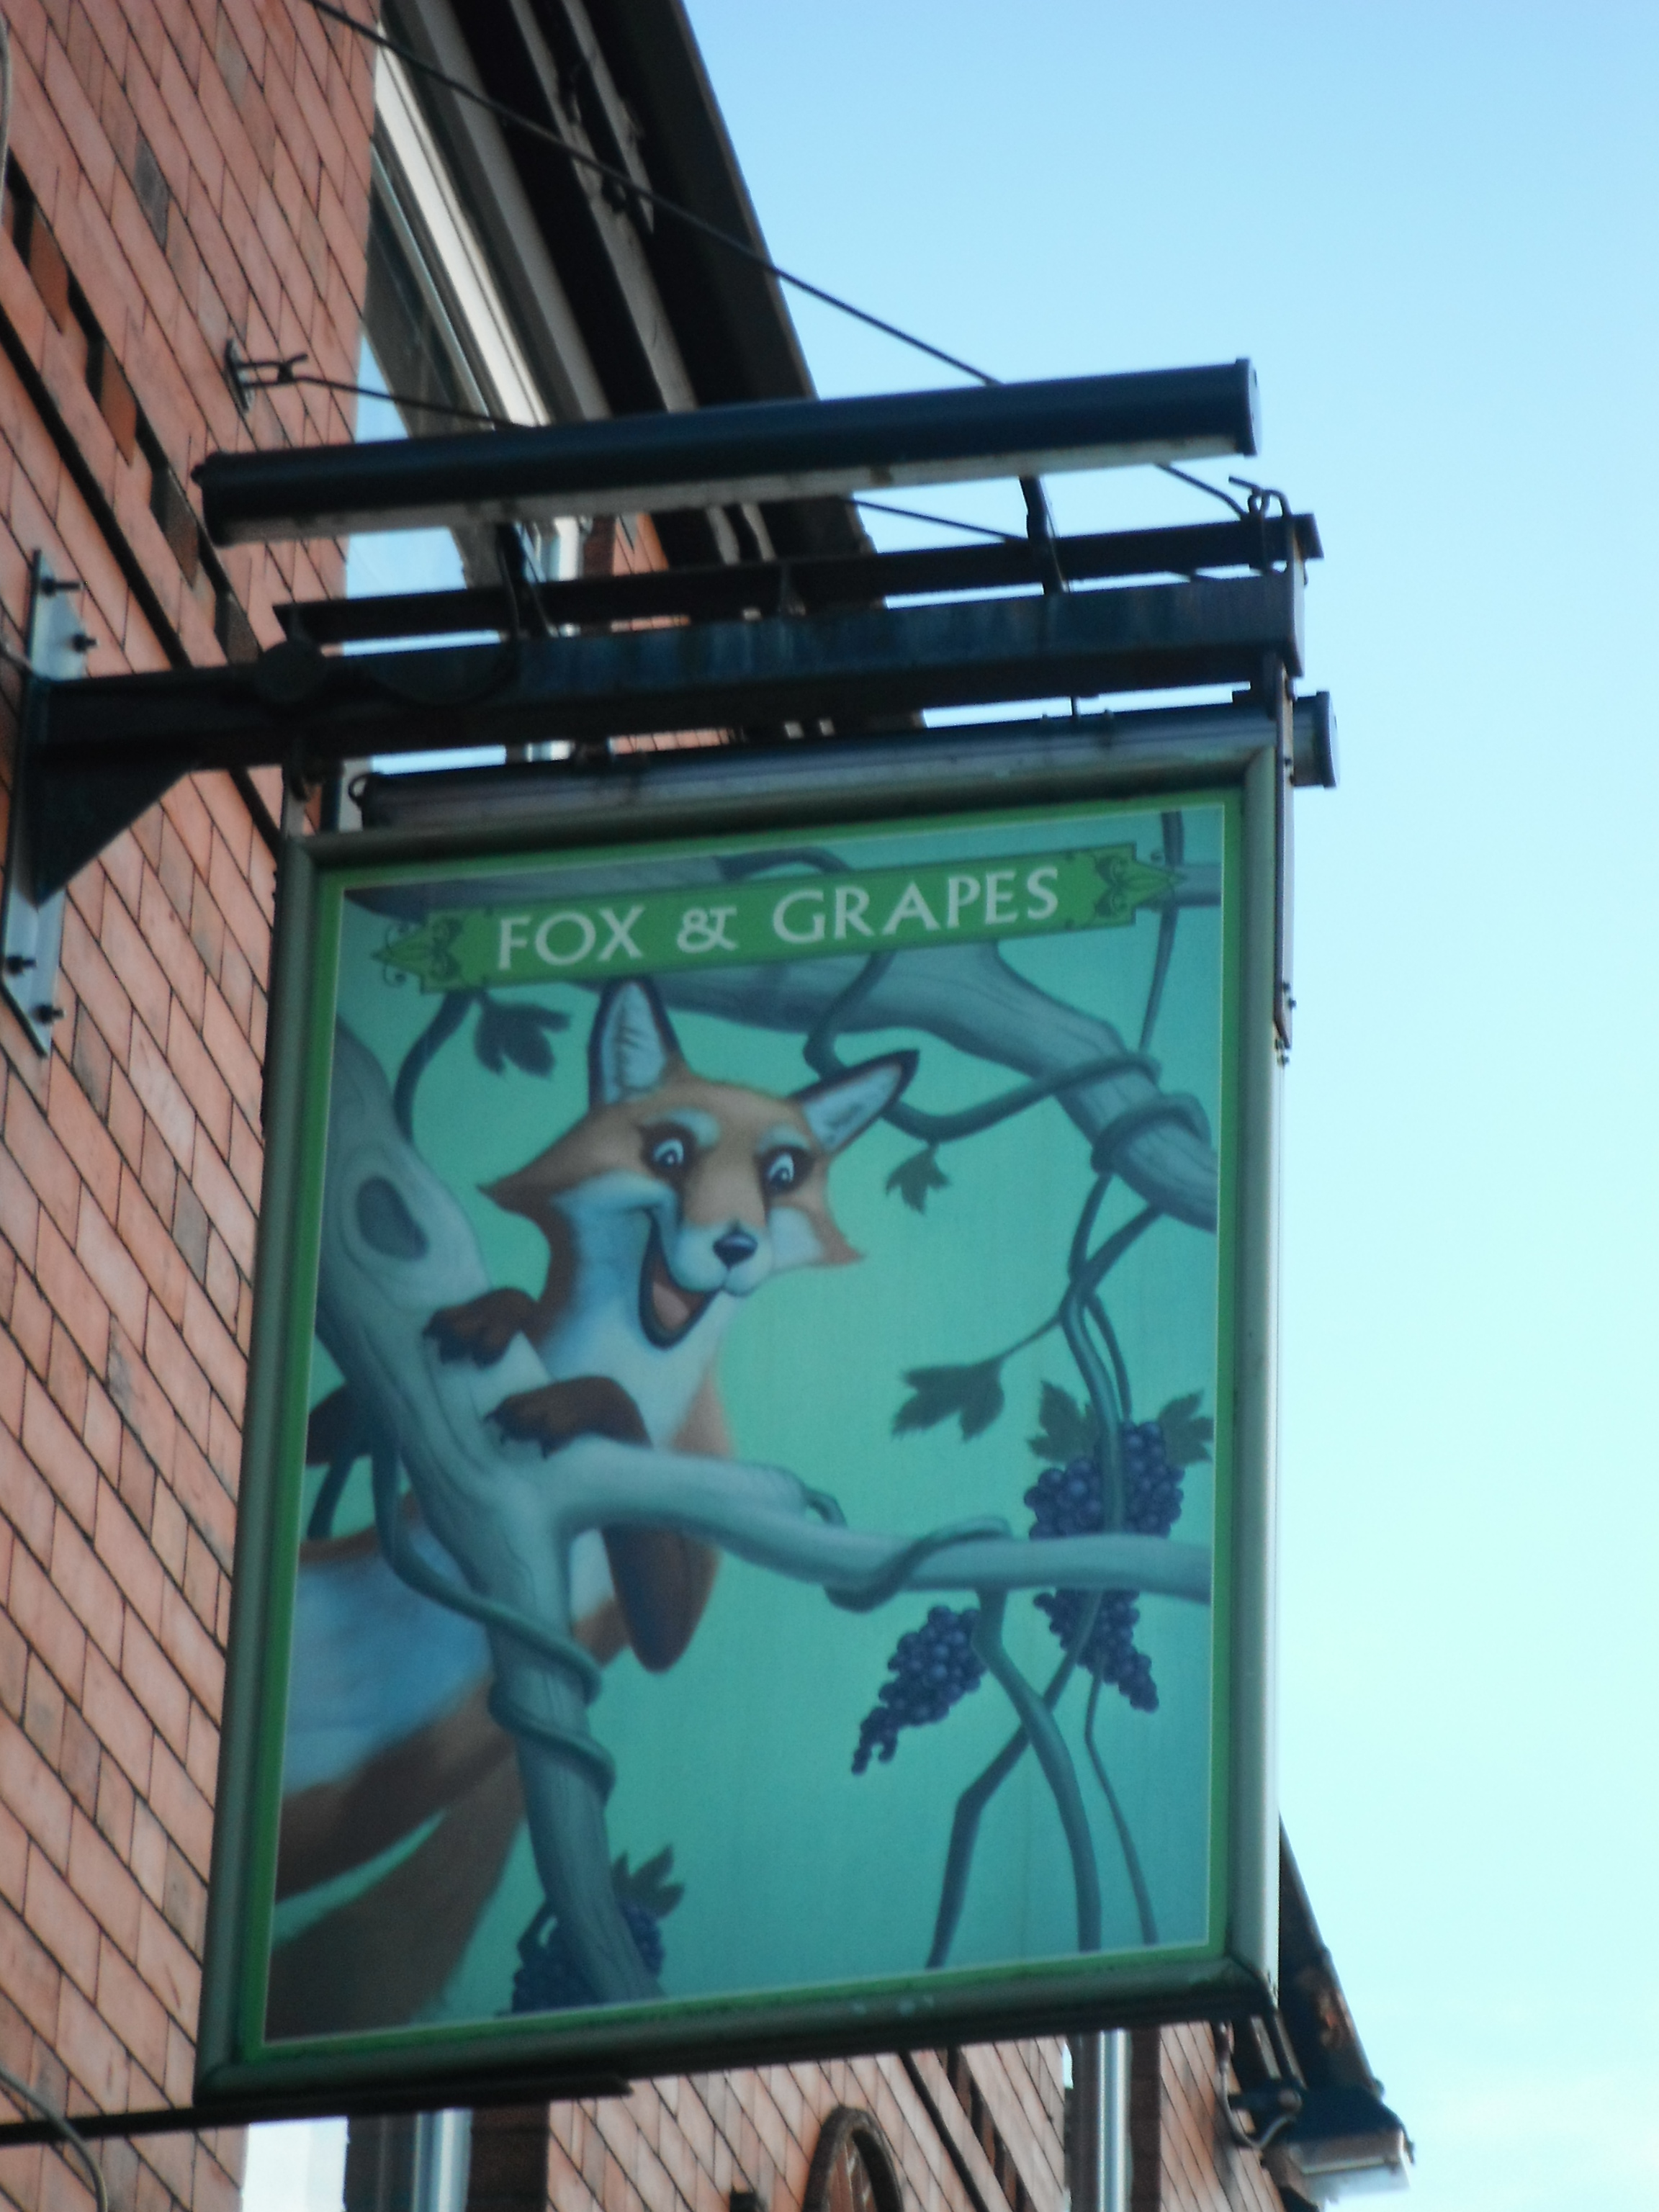 Photo taken by me - The Fox And Graps pub sign, Preston